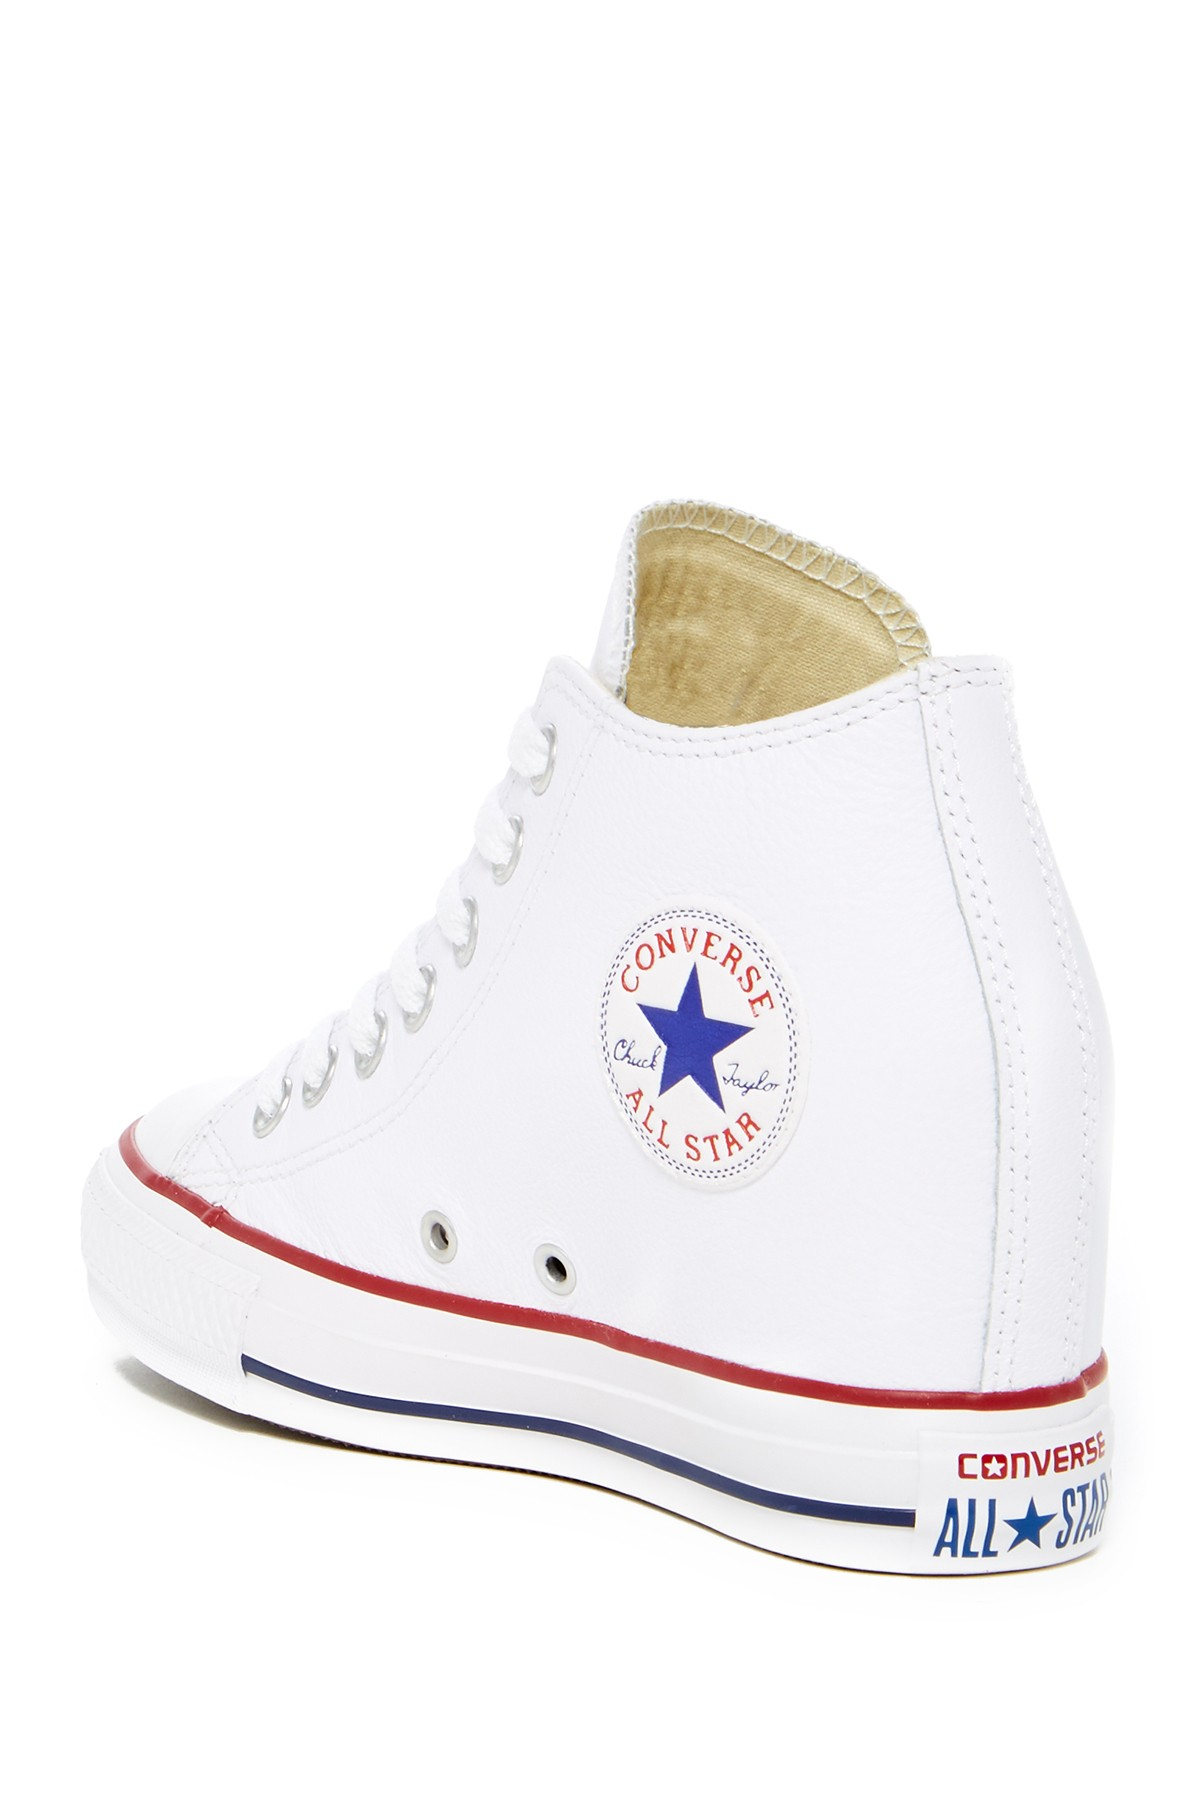 Converse Chuck Taylor Hidden Wedge Sneaker in White | Lyst